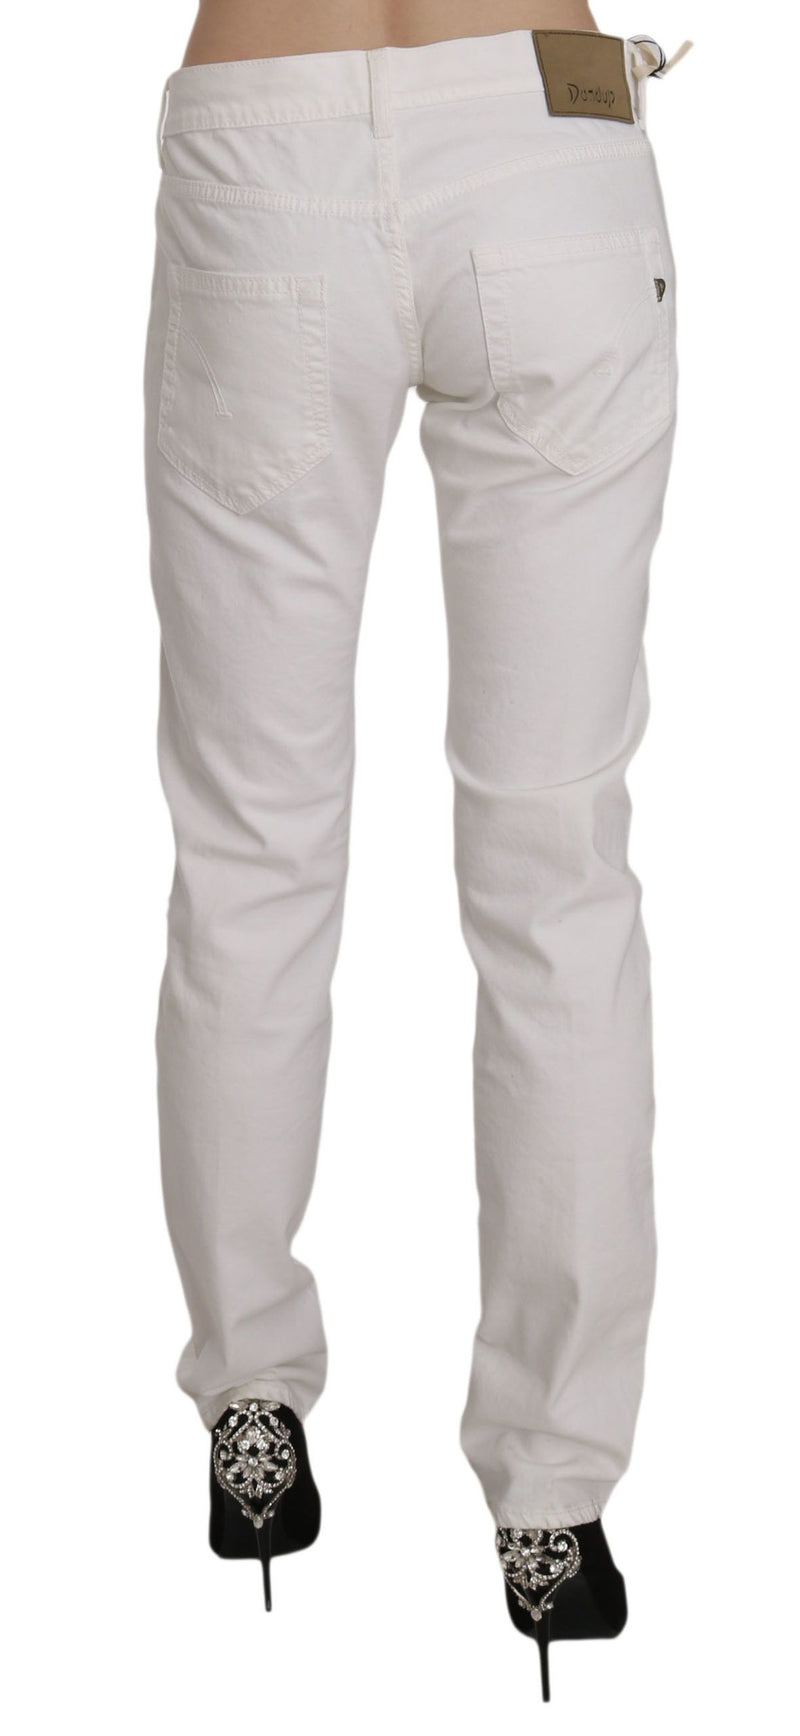 Dondup White Cotton Stretch Skinny Casual Denim Pants Women's Jeans